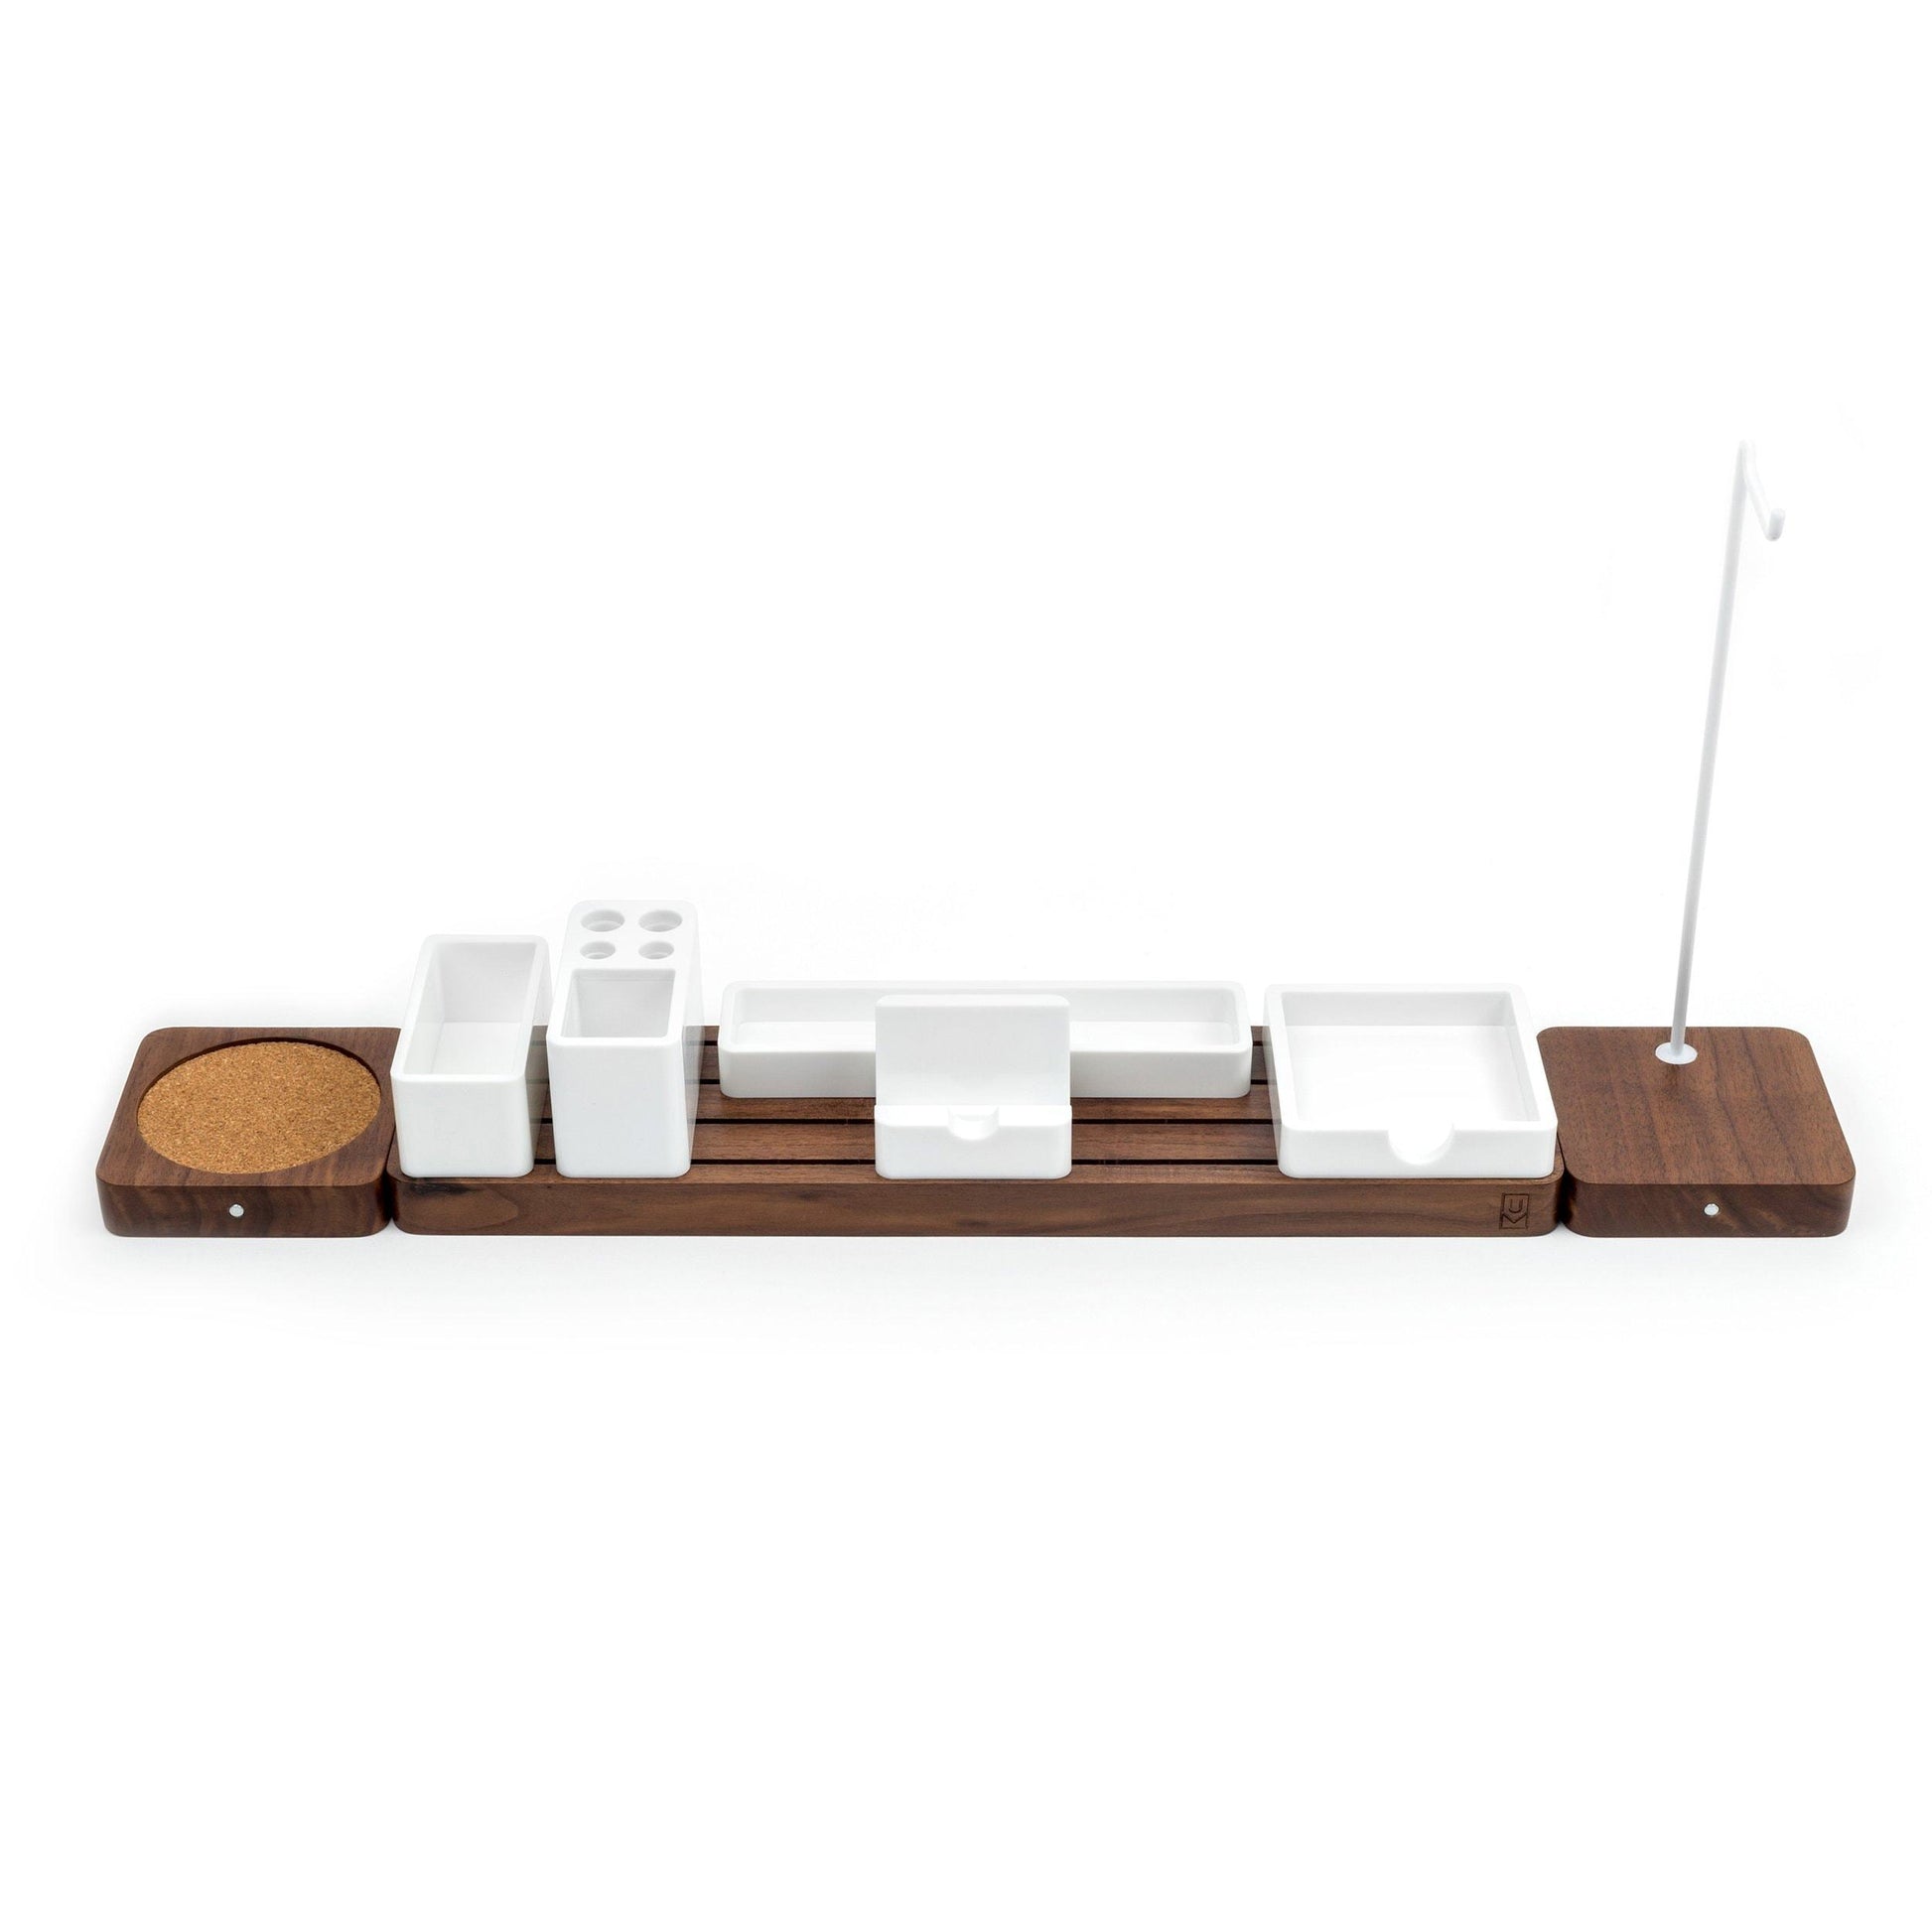 Amazon best gather modular desk organizer extension kit by ugmonk minimalistic wooden desktop sorter organize your workspace office supplies kitchen or bedroom